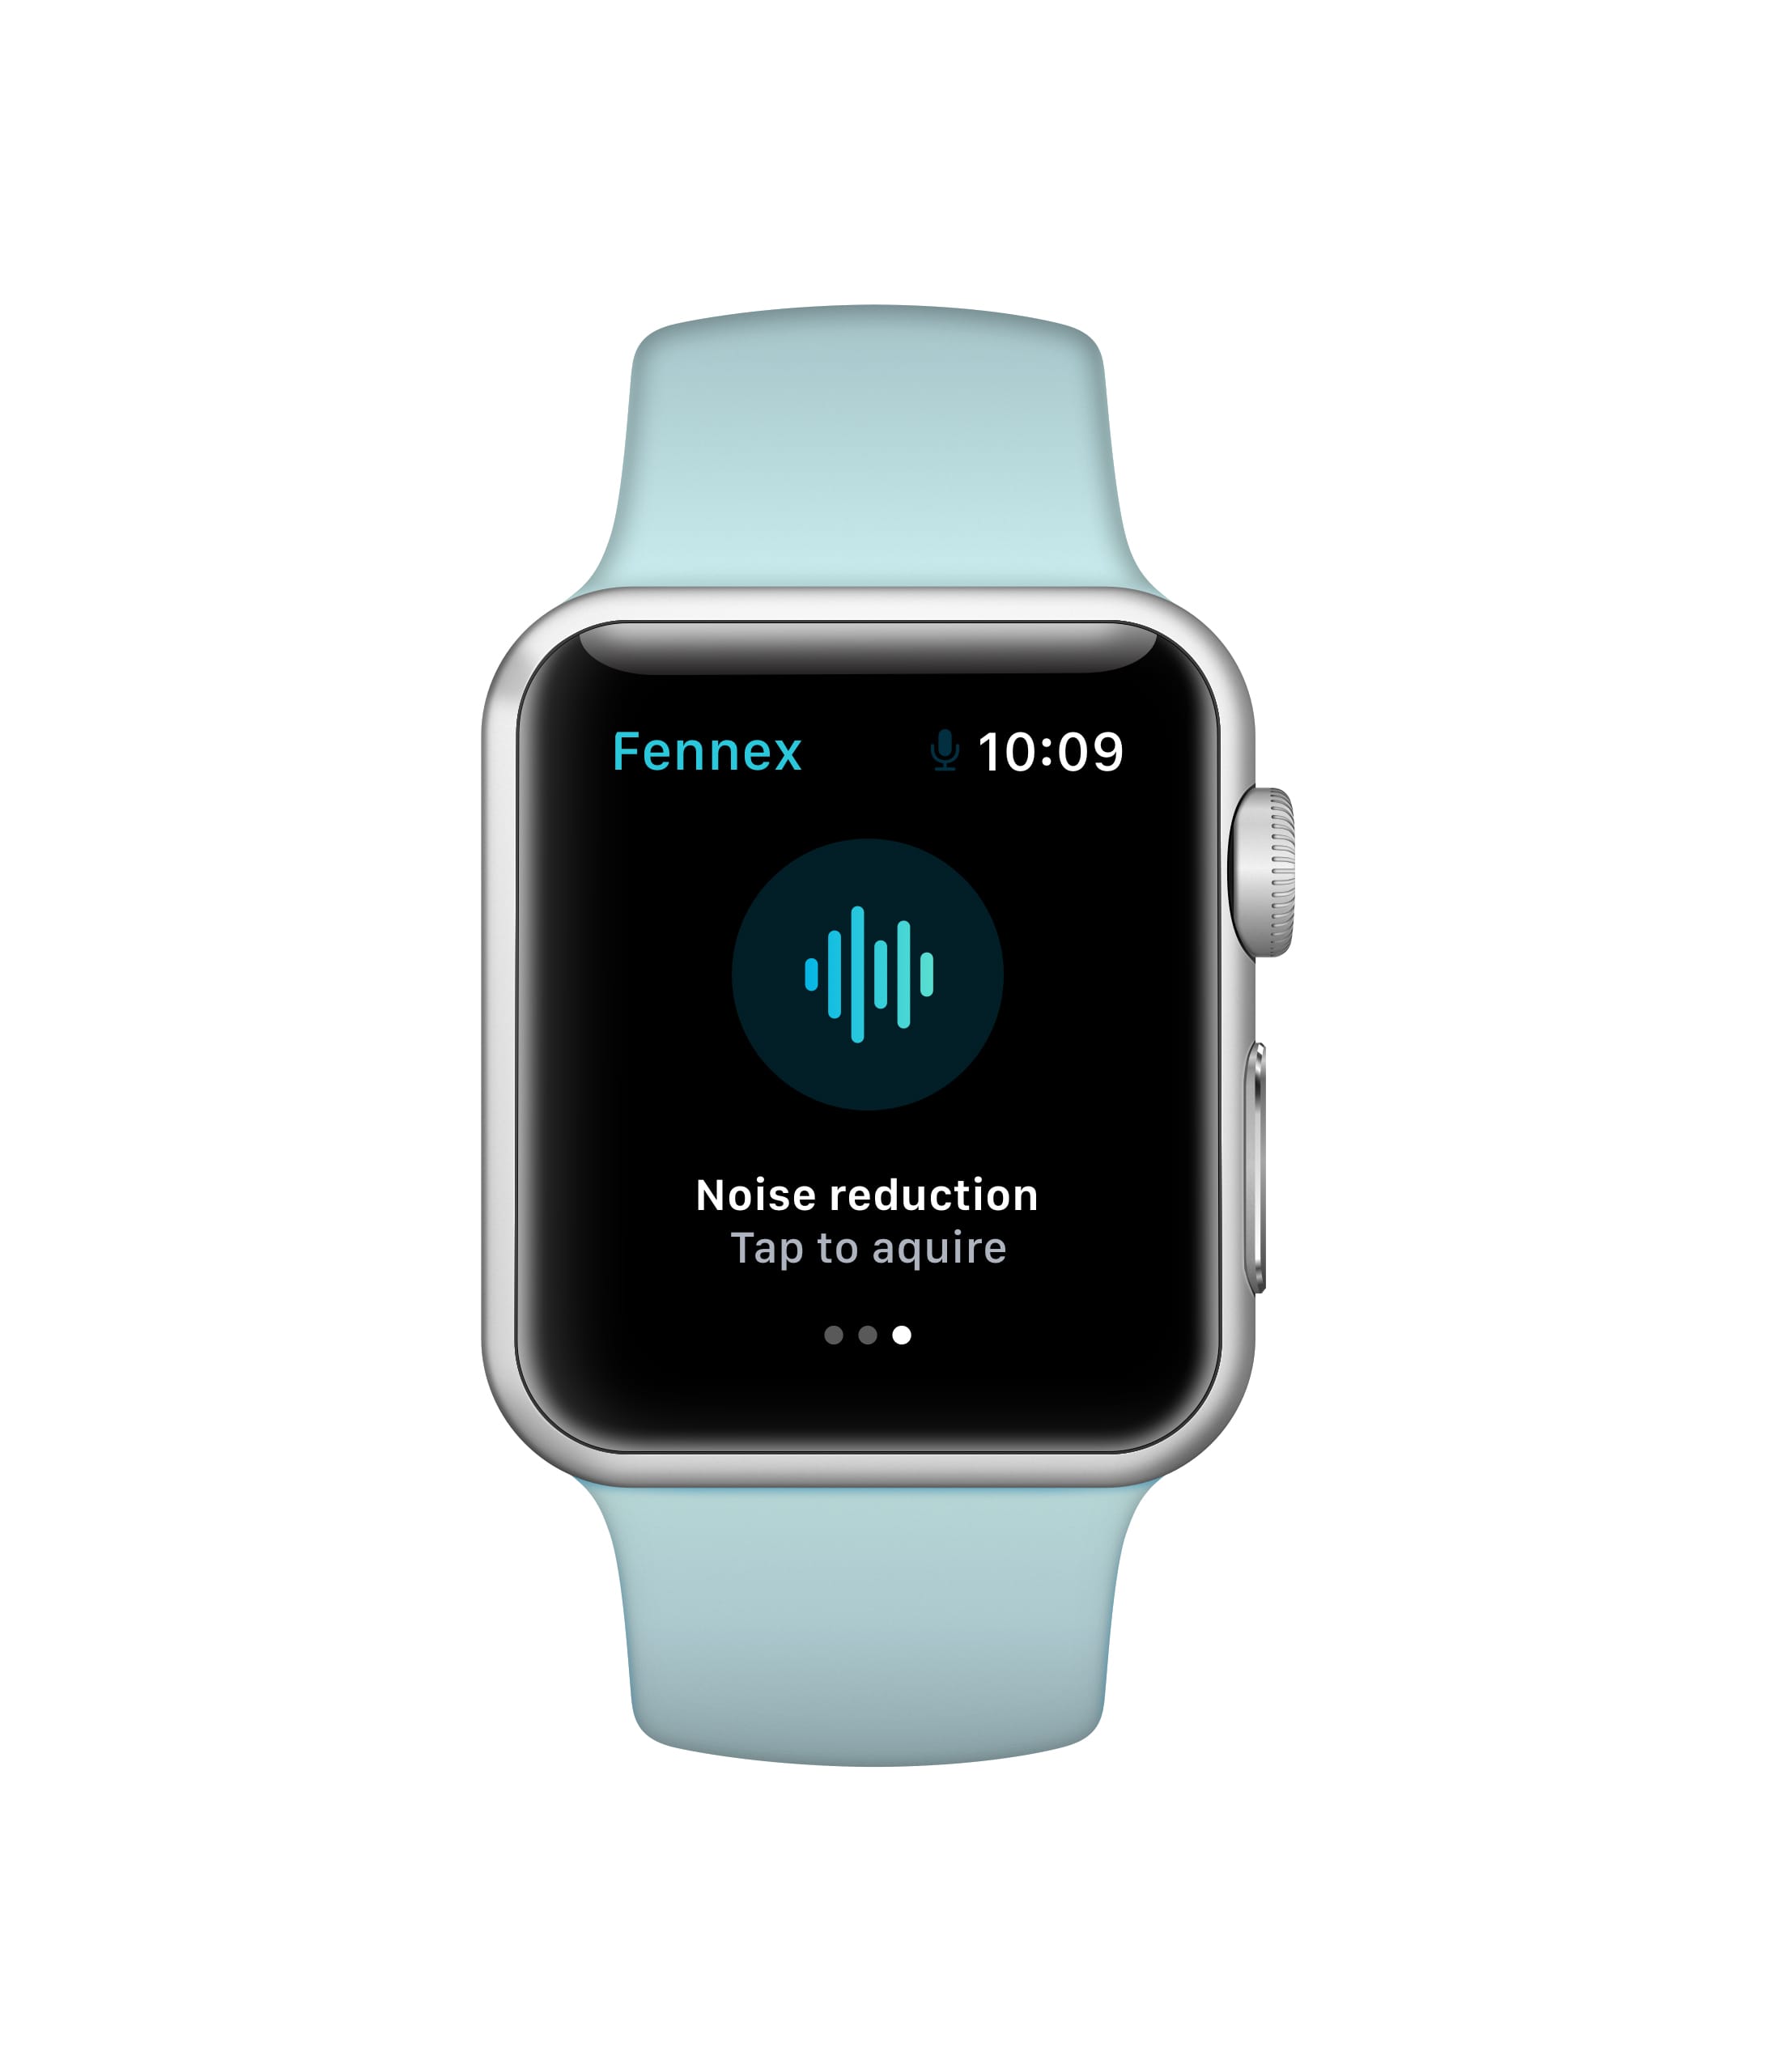 Fennex app watchOS noise reduction interface